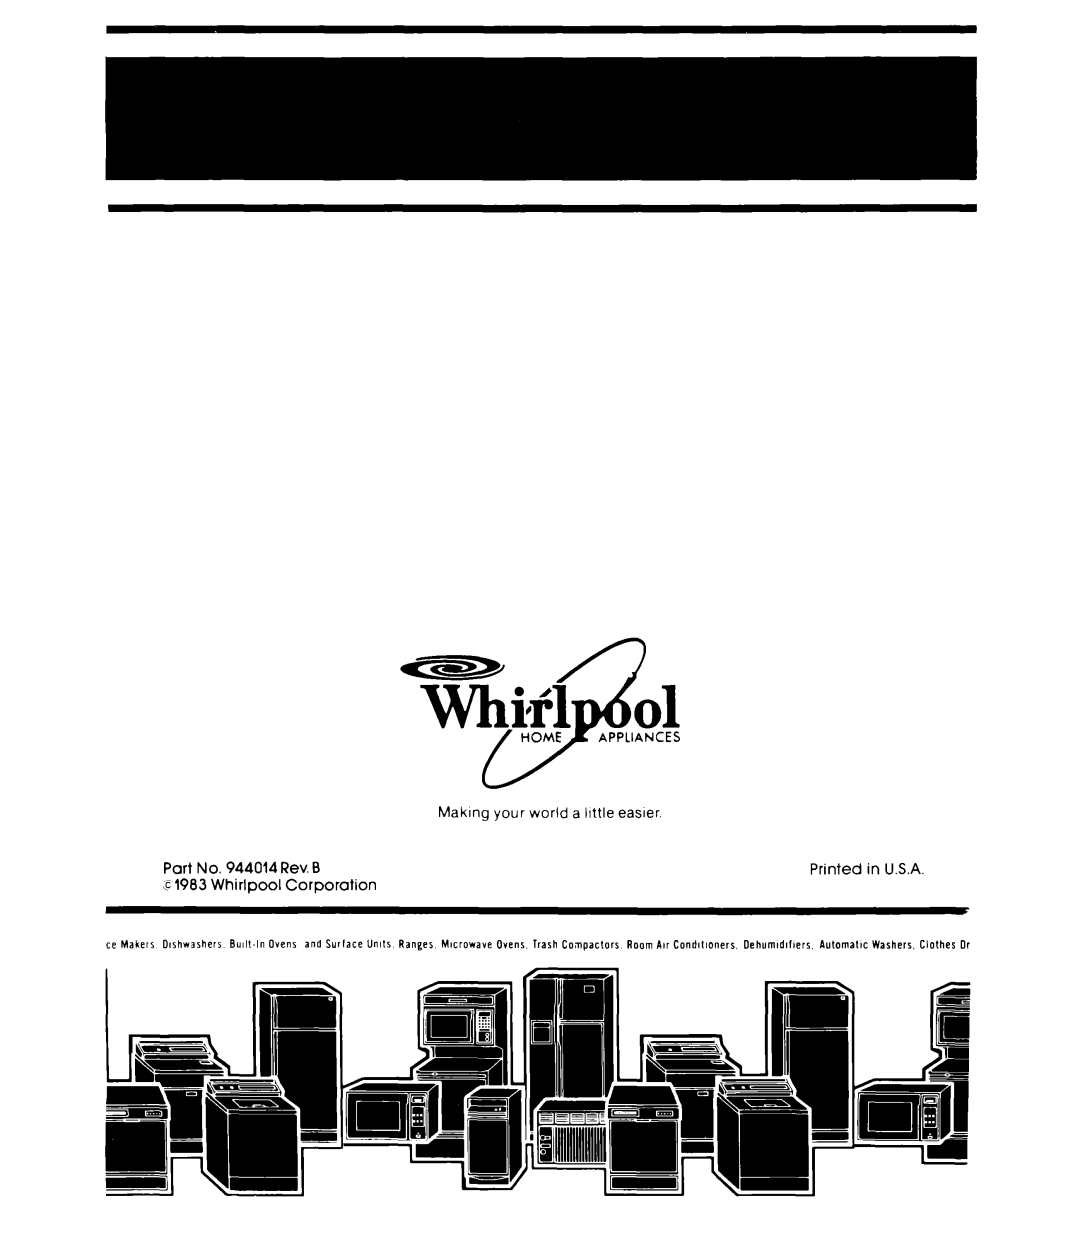 Whirlpool ED26SS manual Maklng your world a llttle easier, 944014 Rev. Ei, Printed, in U.S.A, Corporation, C1983 Whirlpool 